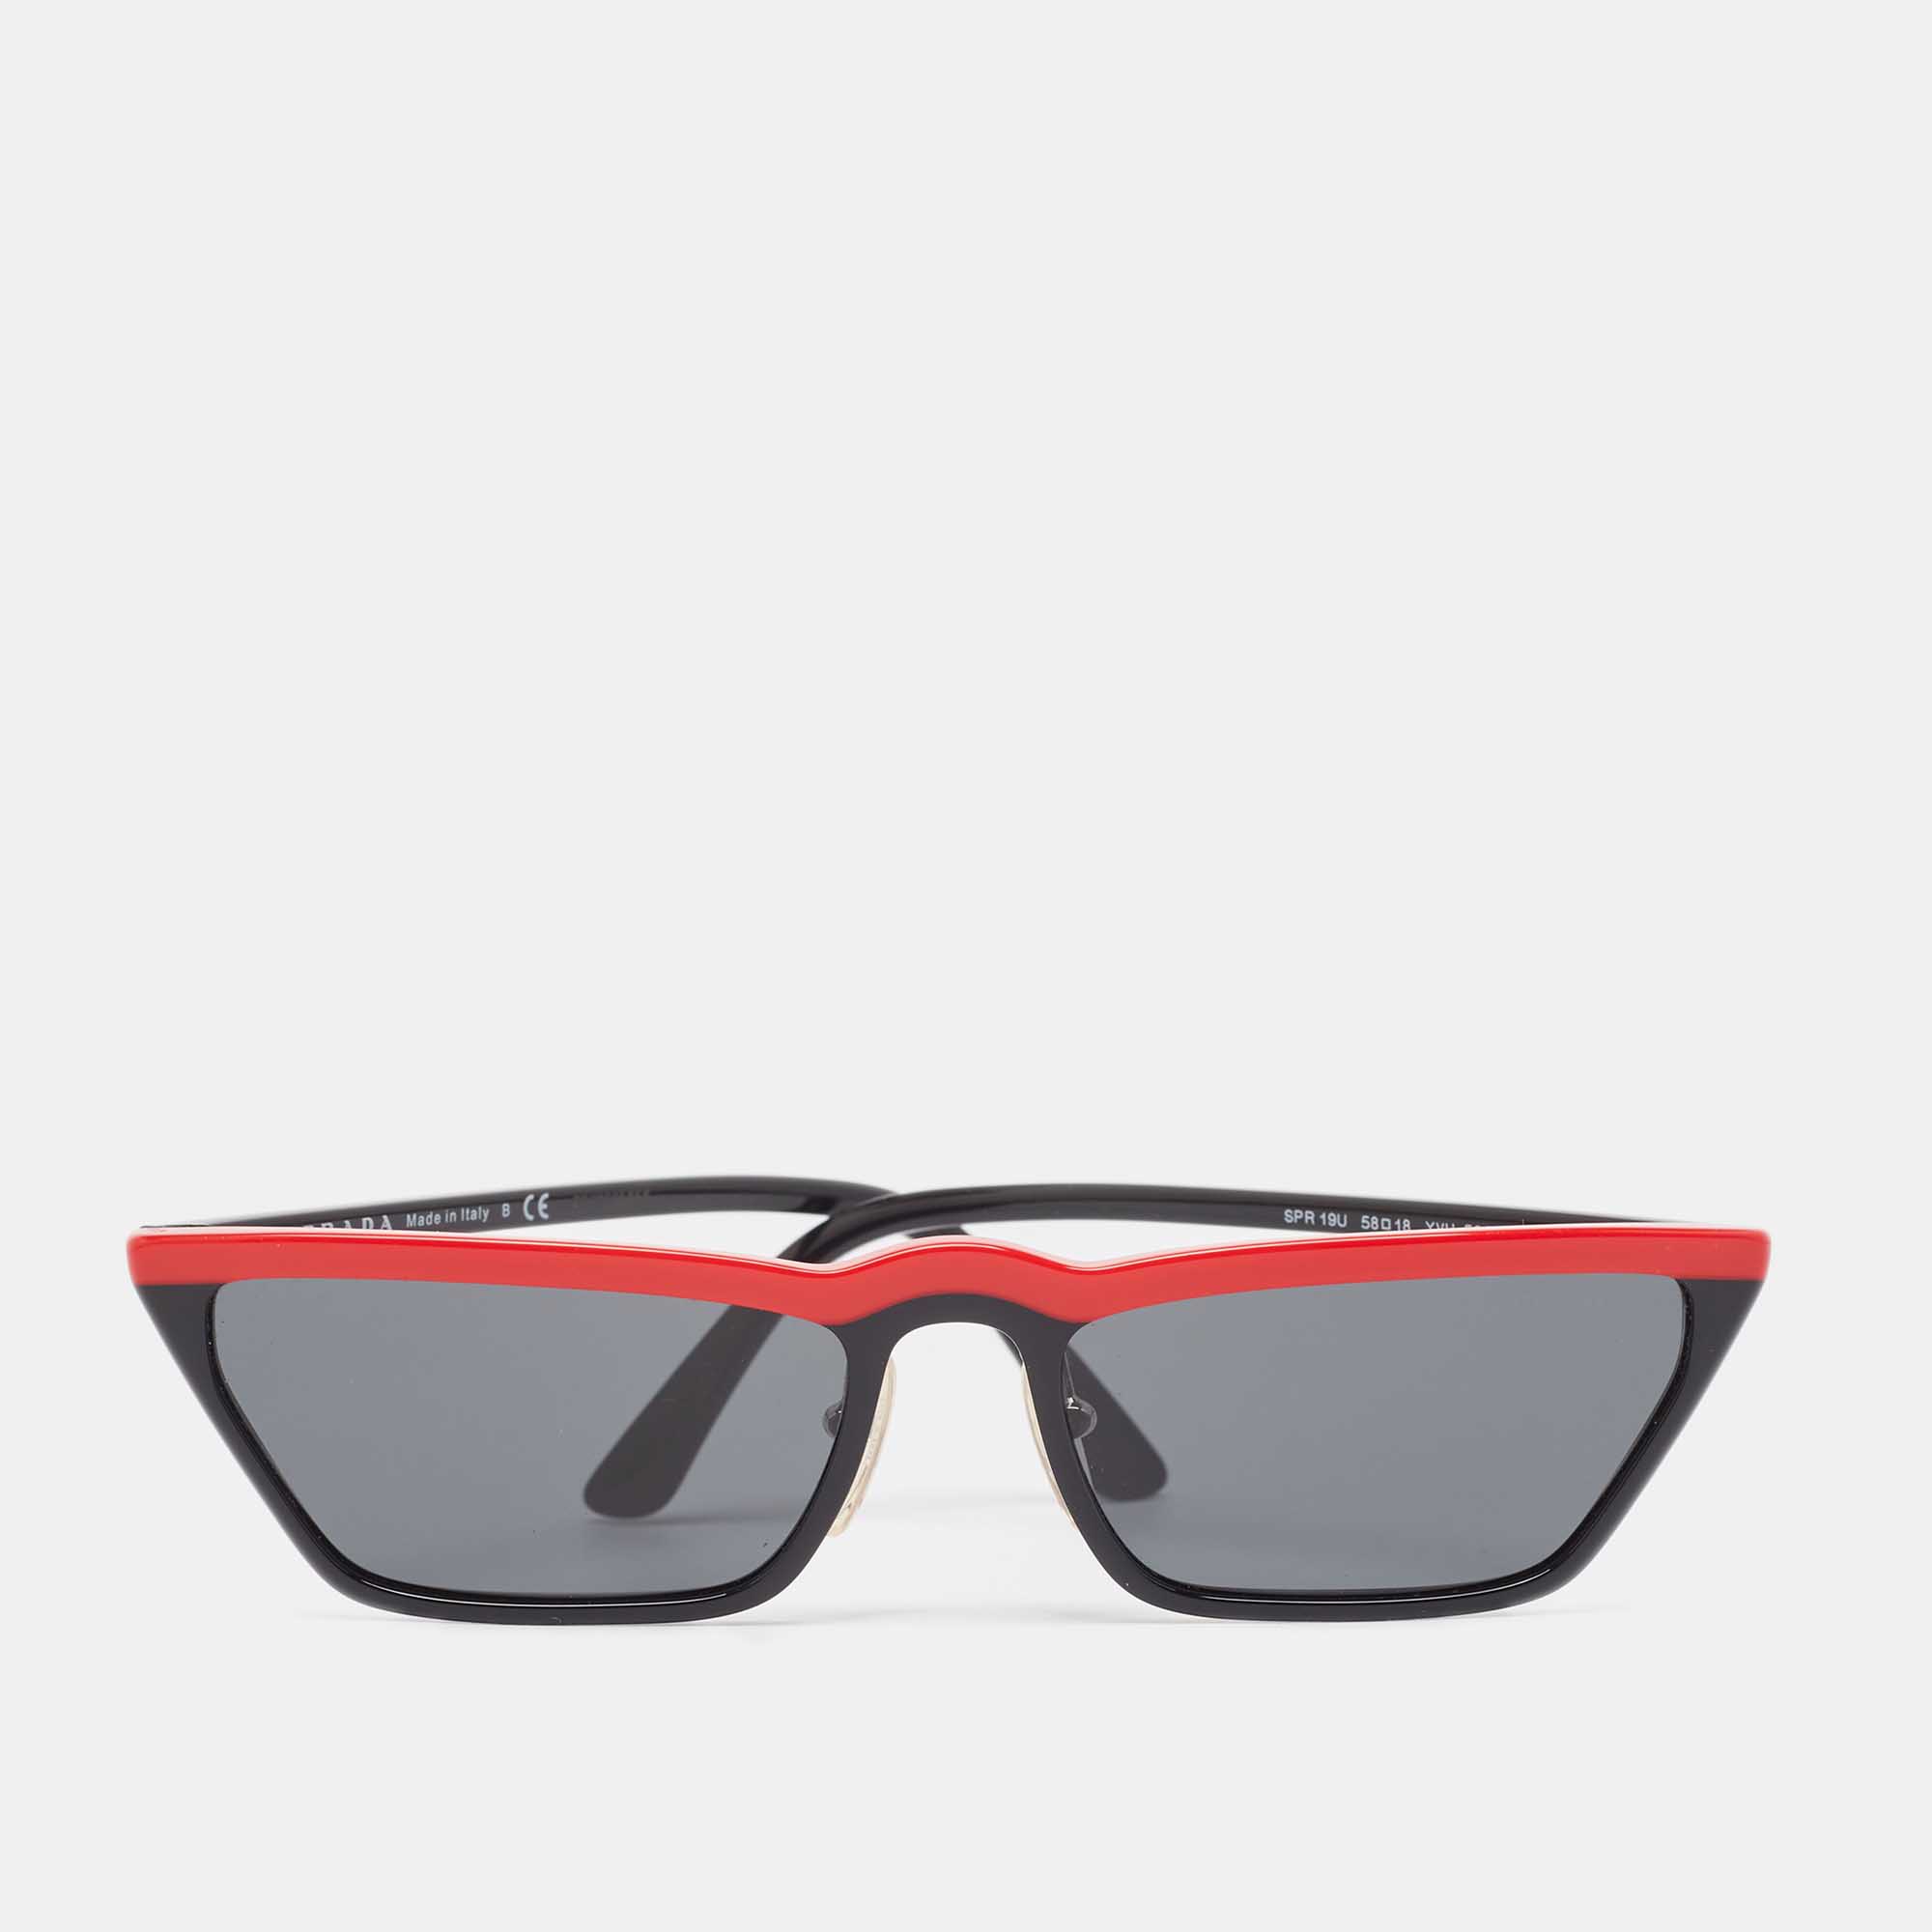 Prada black/red spr 19u rectangular sunglasses